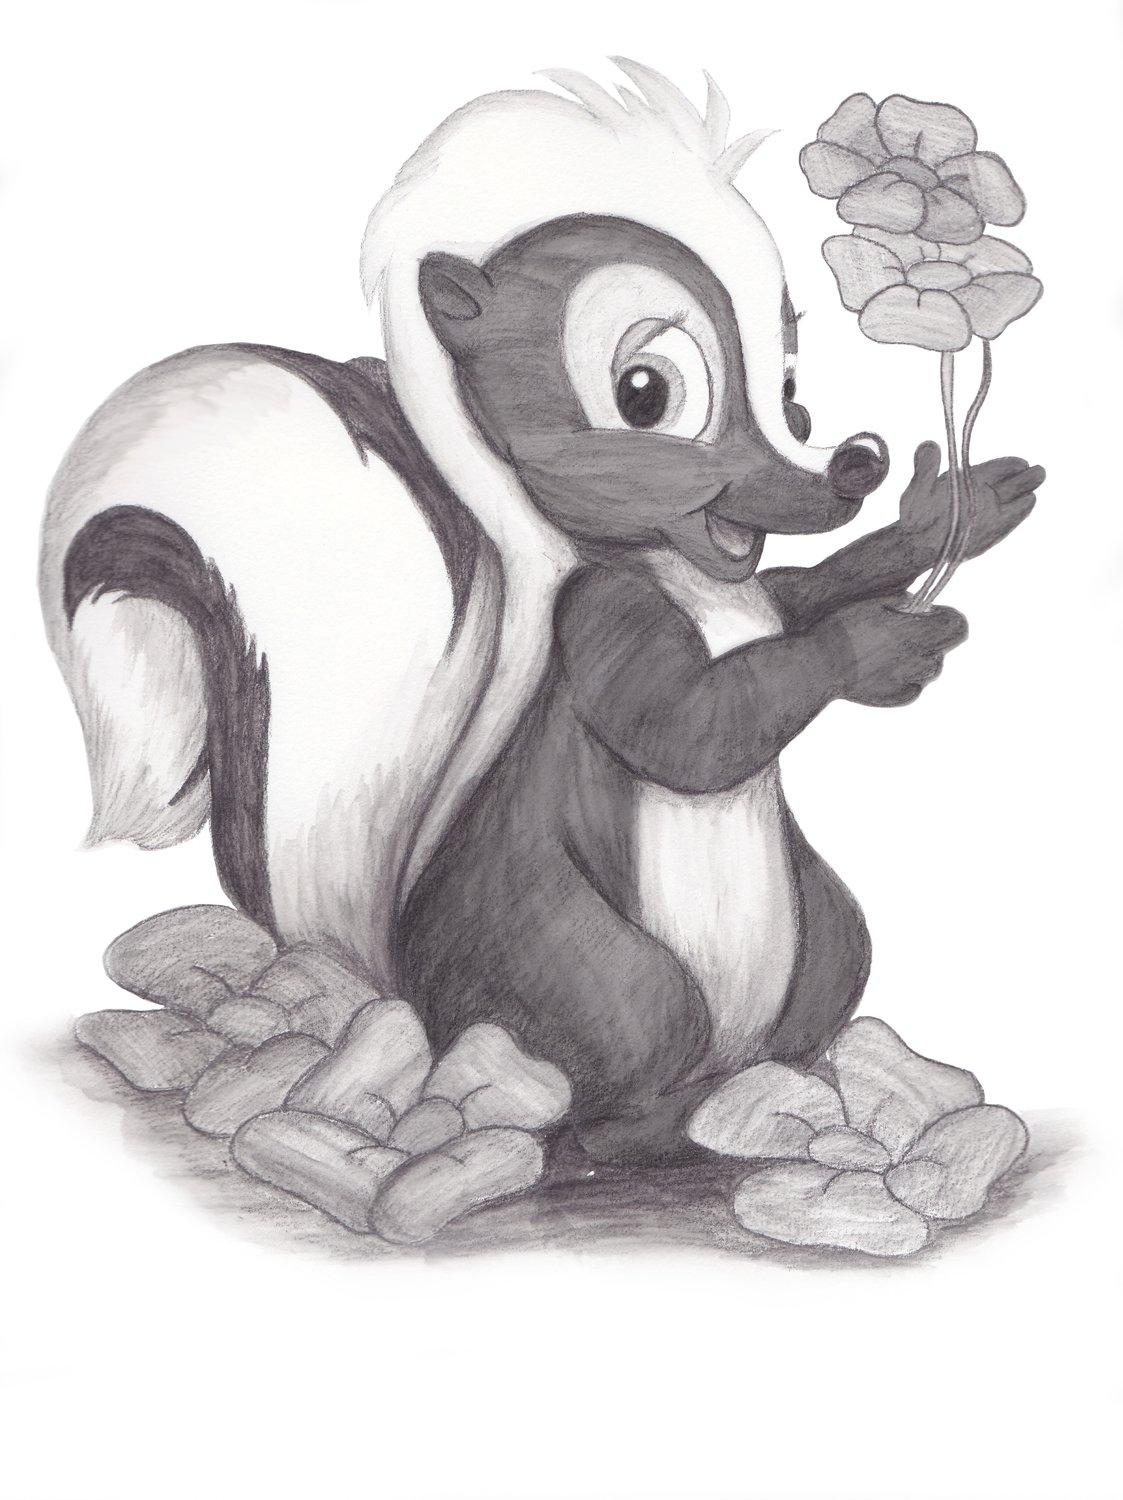 Skunk drawing